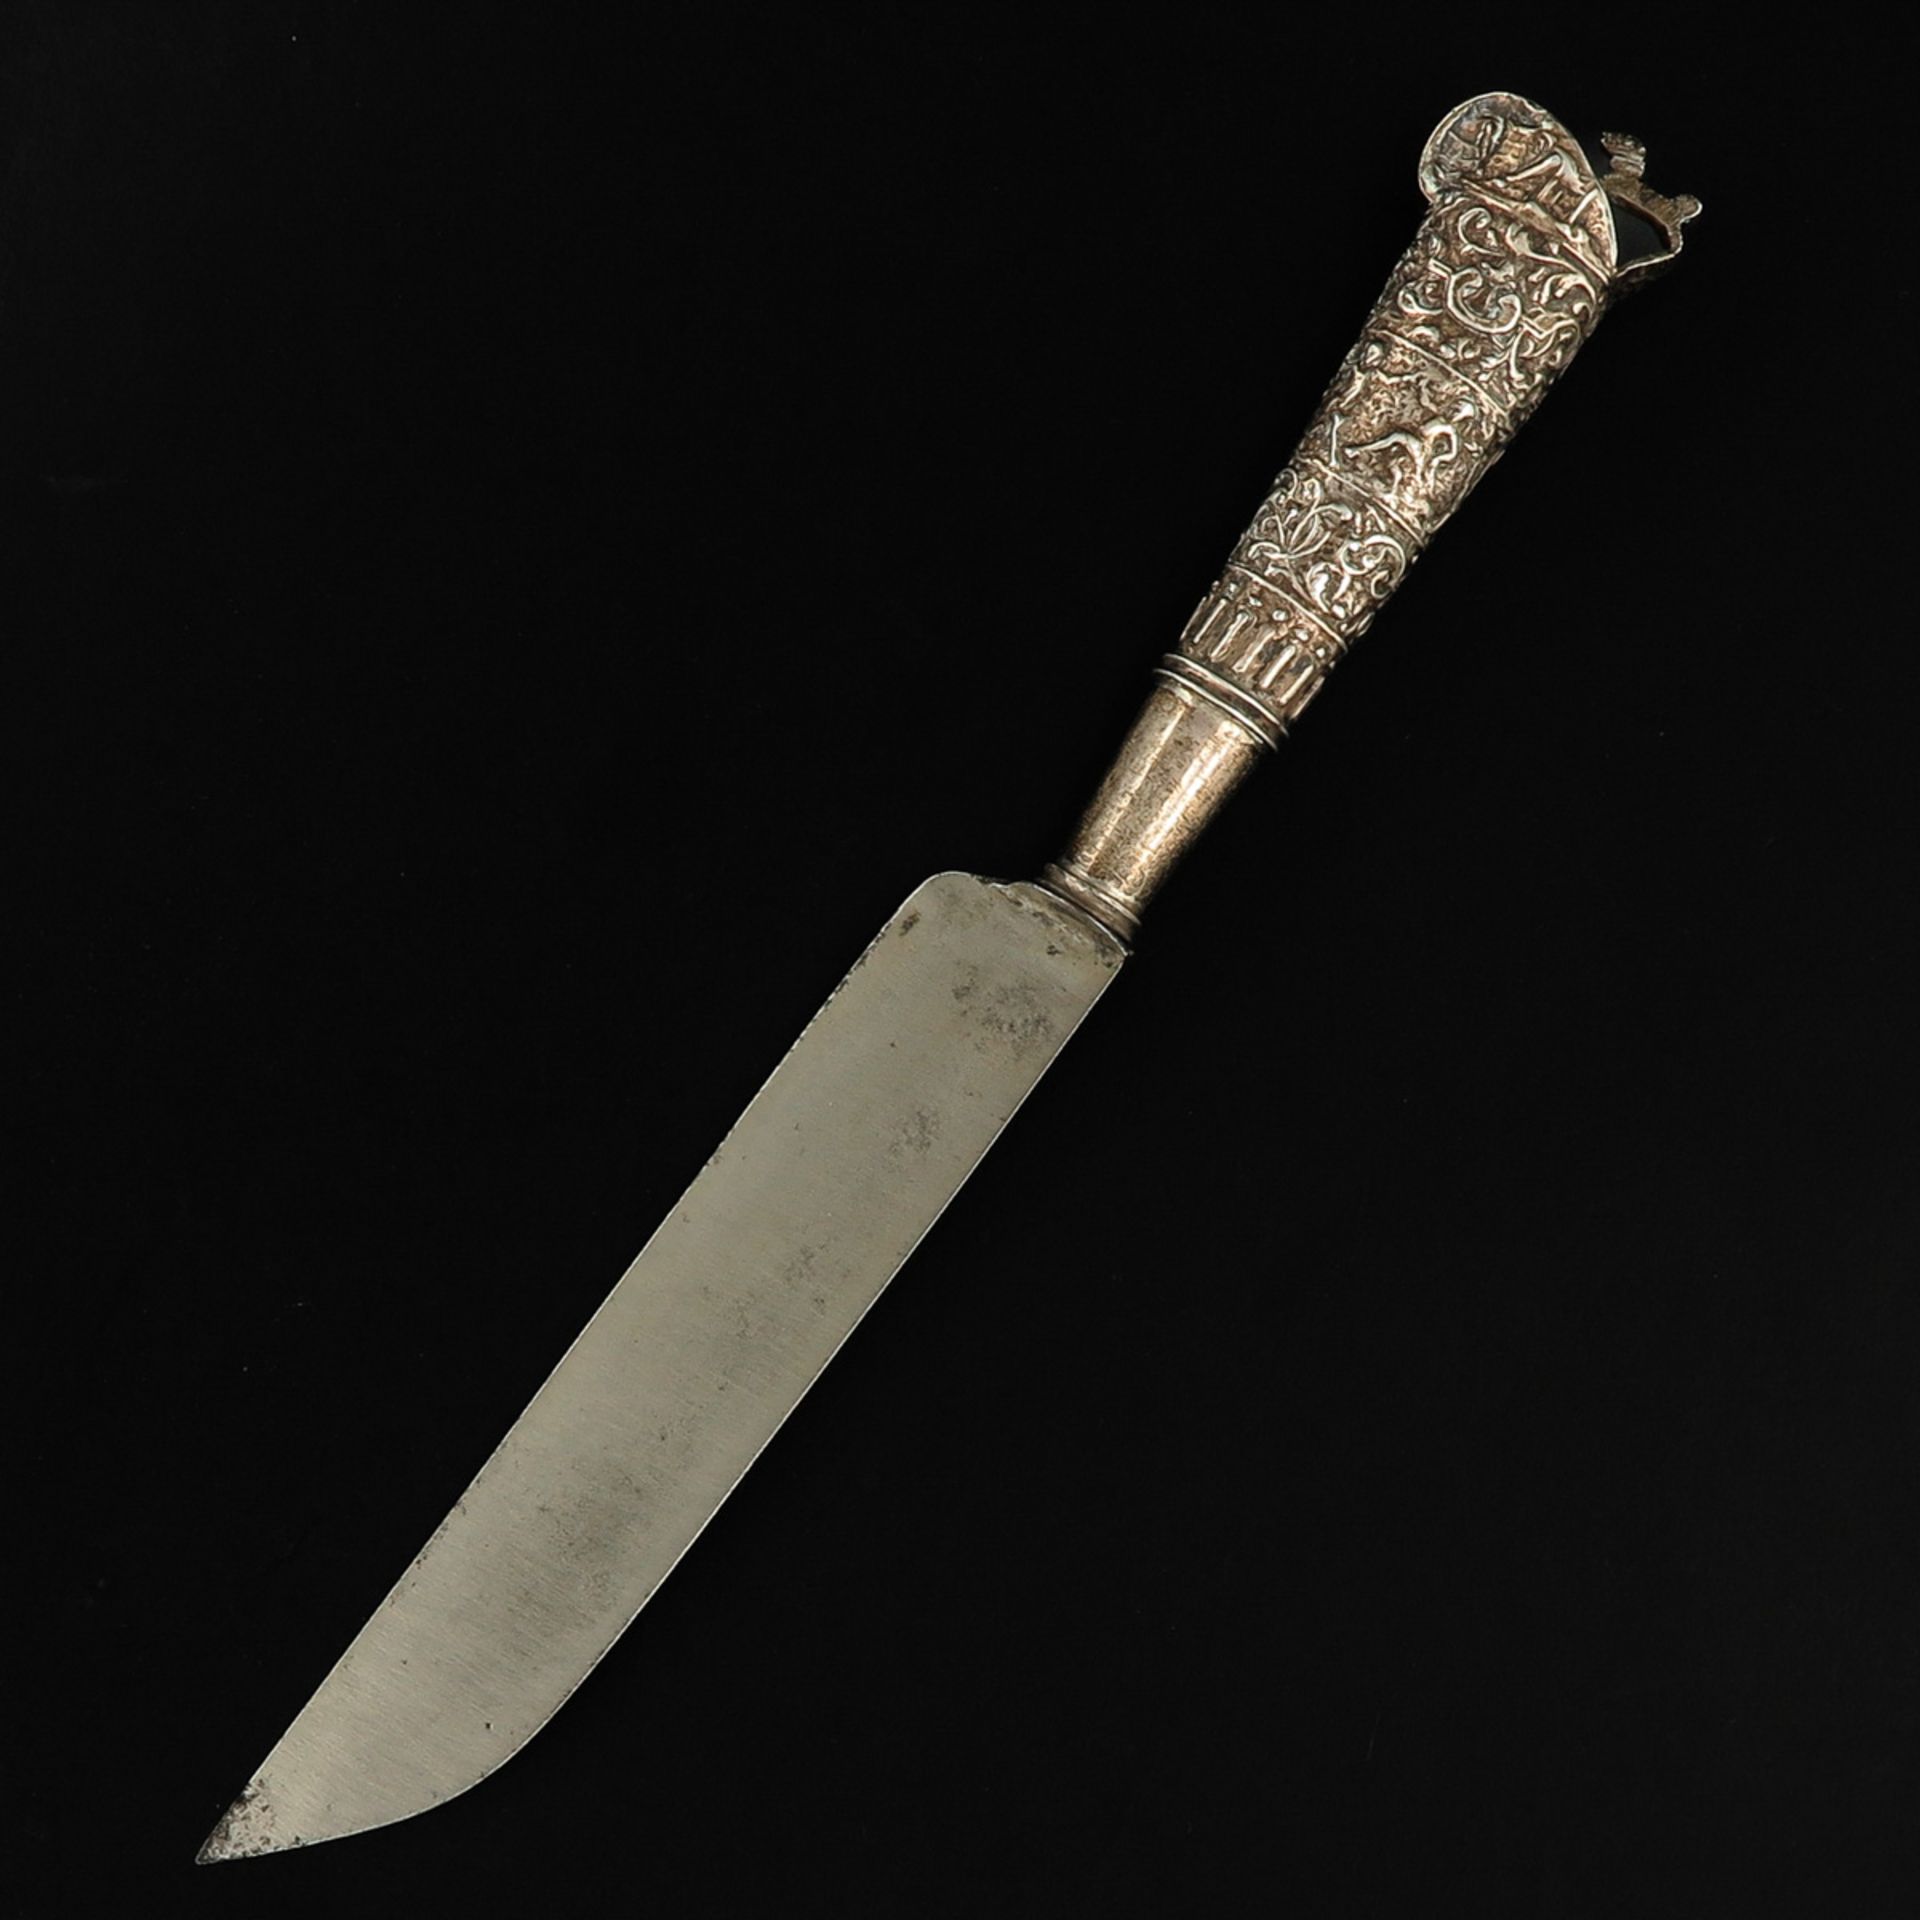 A Knife from Zeeland